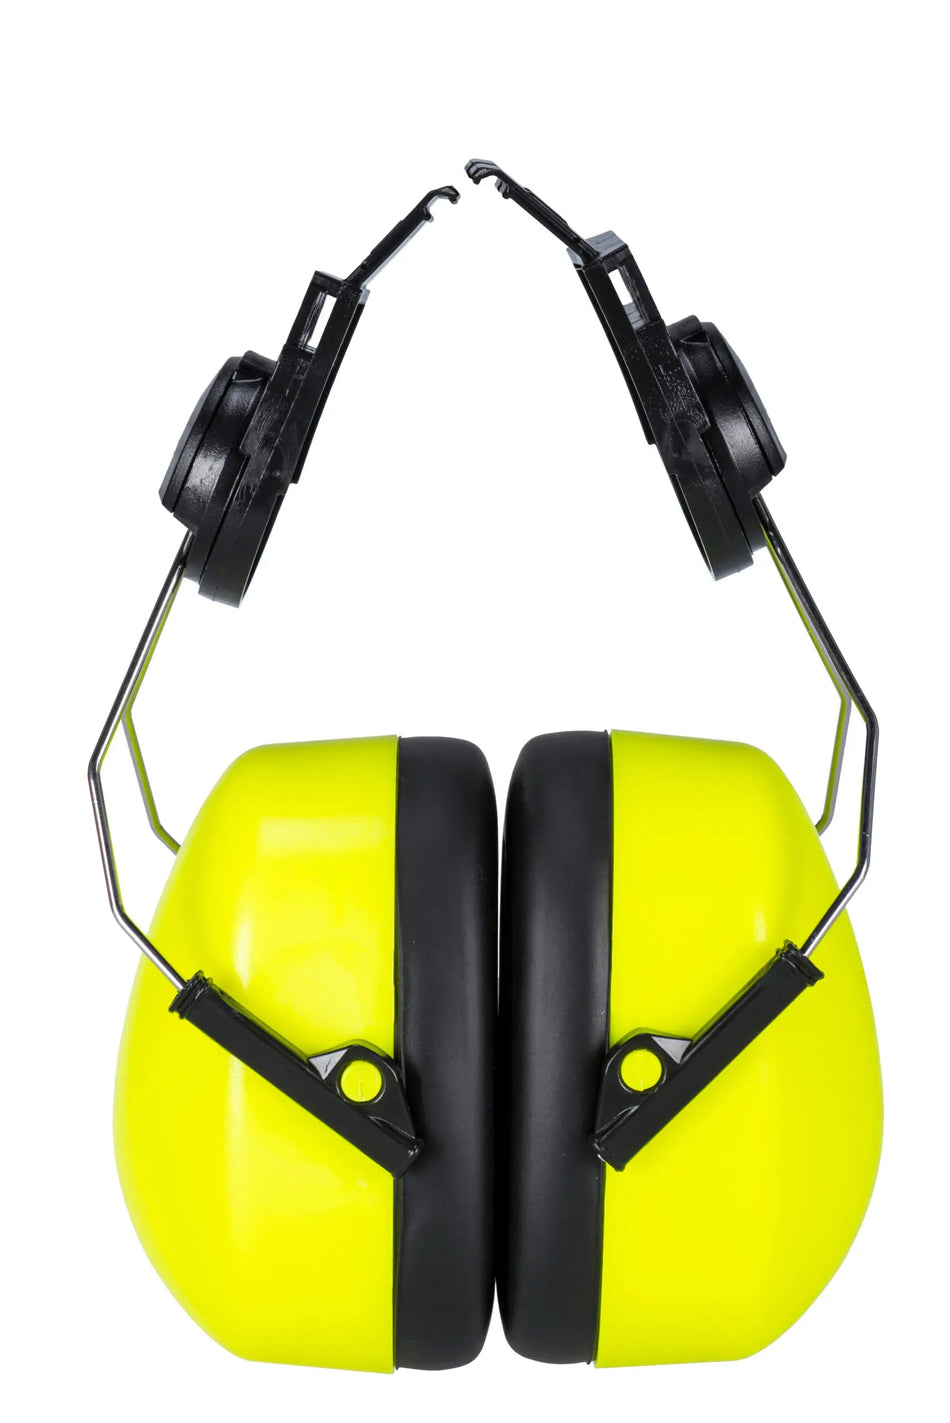 PS47 Endurance HiVis Clip-on Gehörschutz Gelb Workschutz